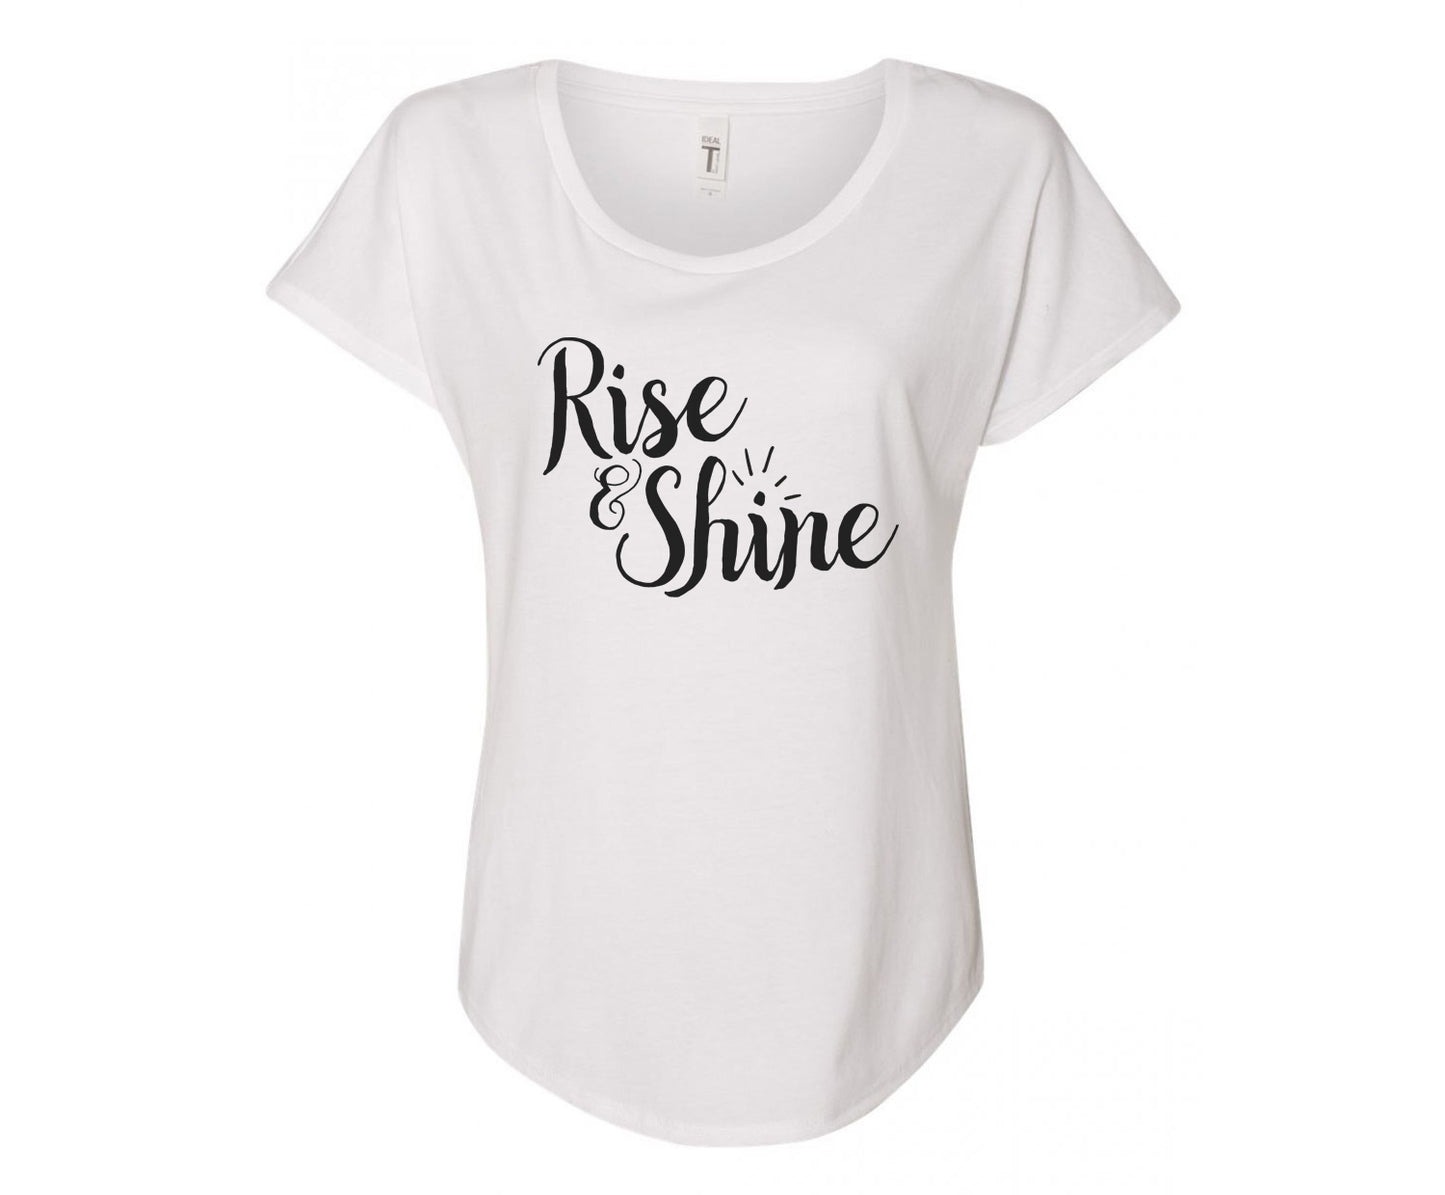 Rise & Shine Ladies Tee Shirt - In Grey & White